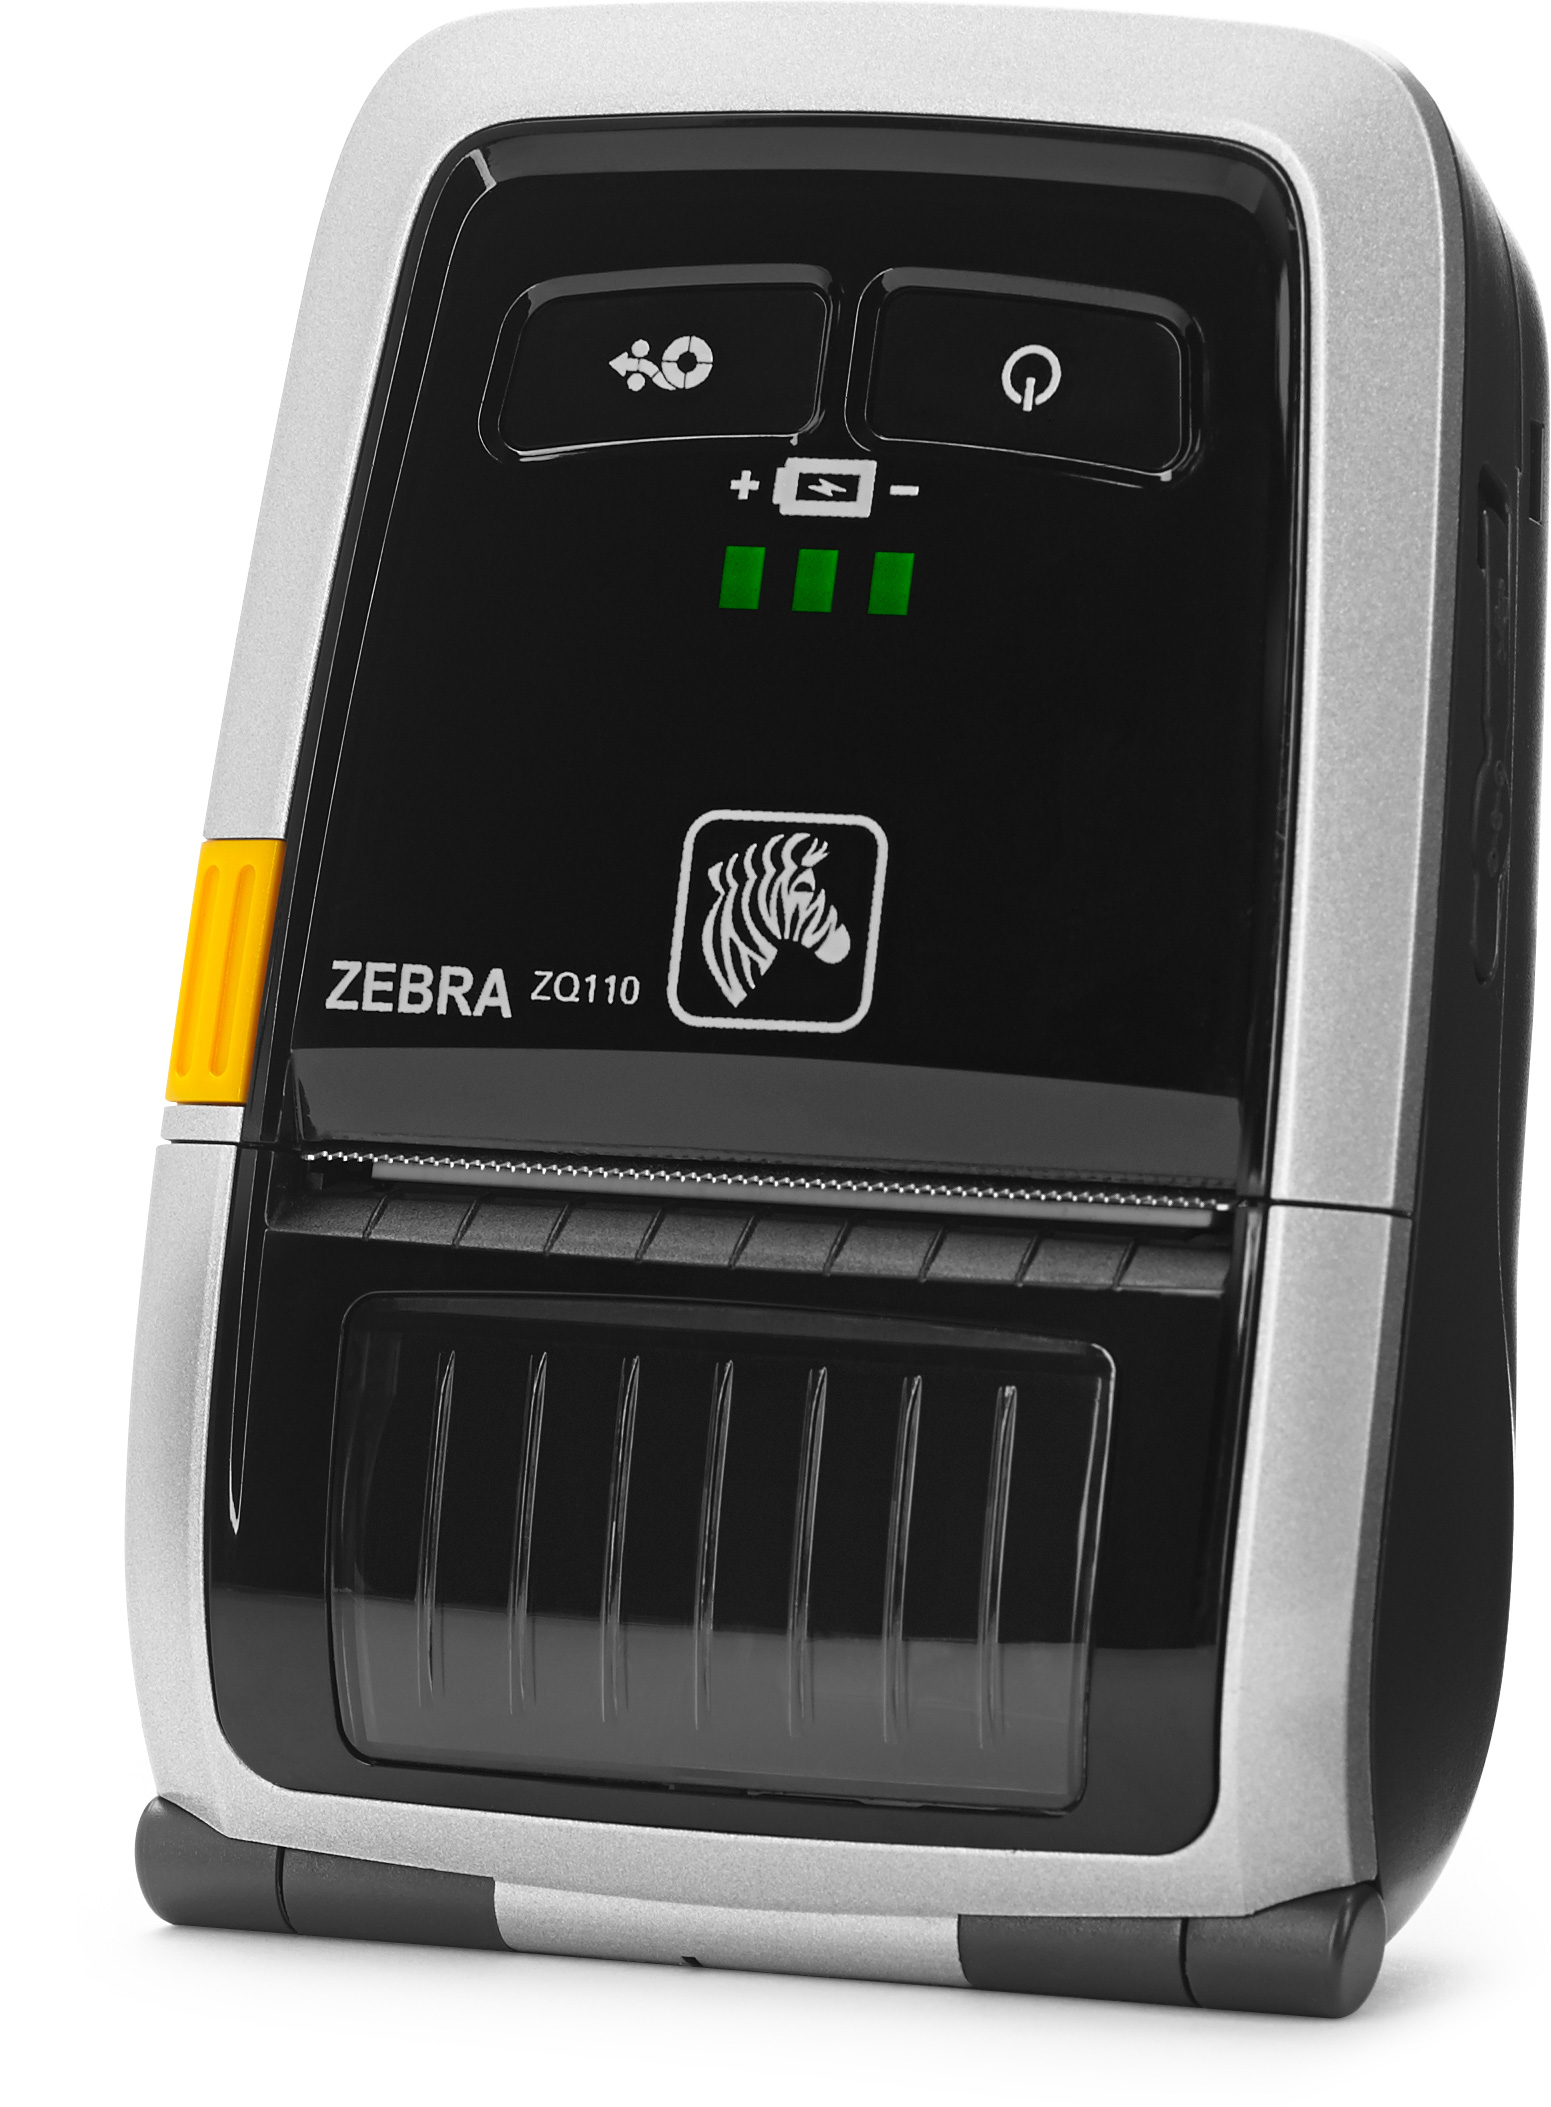 Zebra s Newest Receipt Printer Is A Game Changer TEConnect Portal